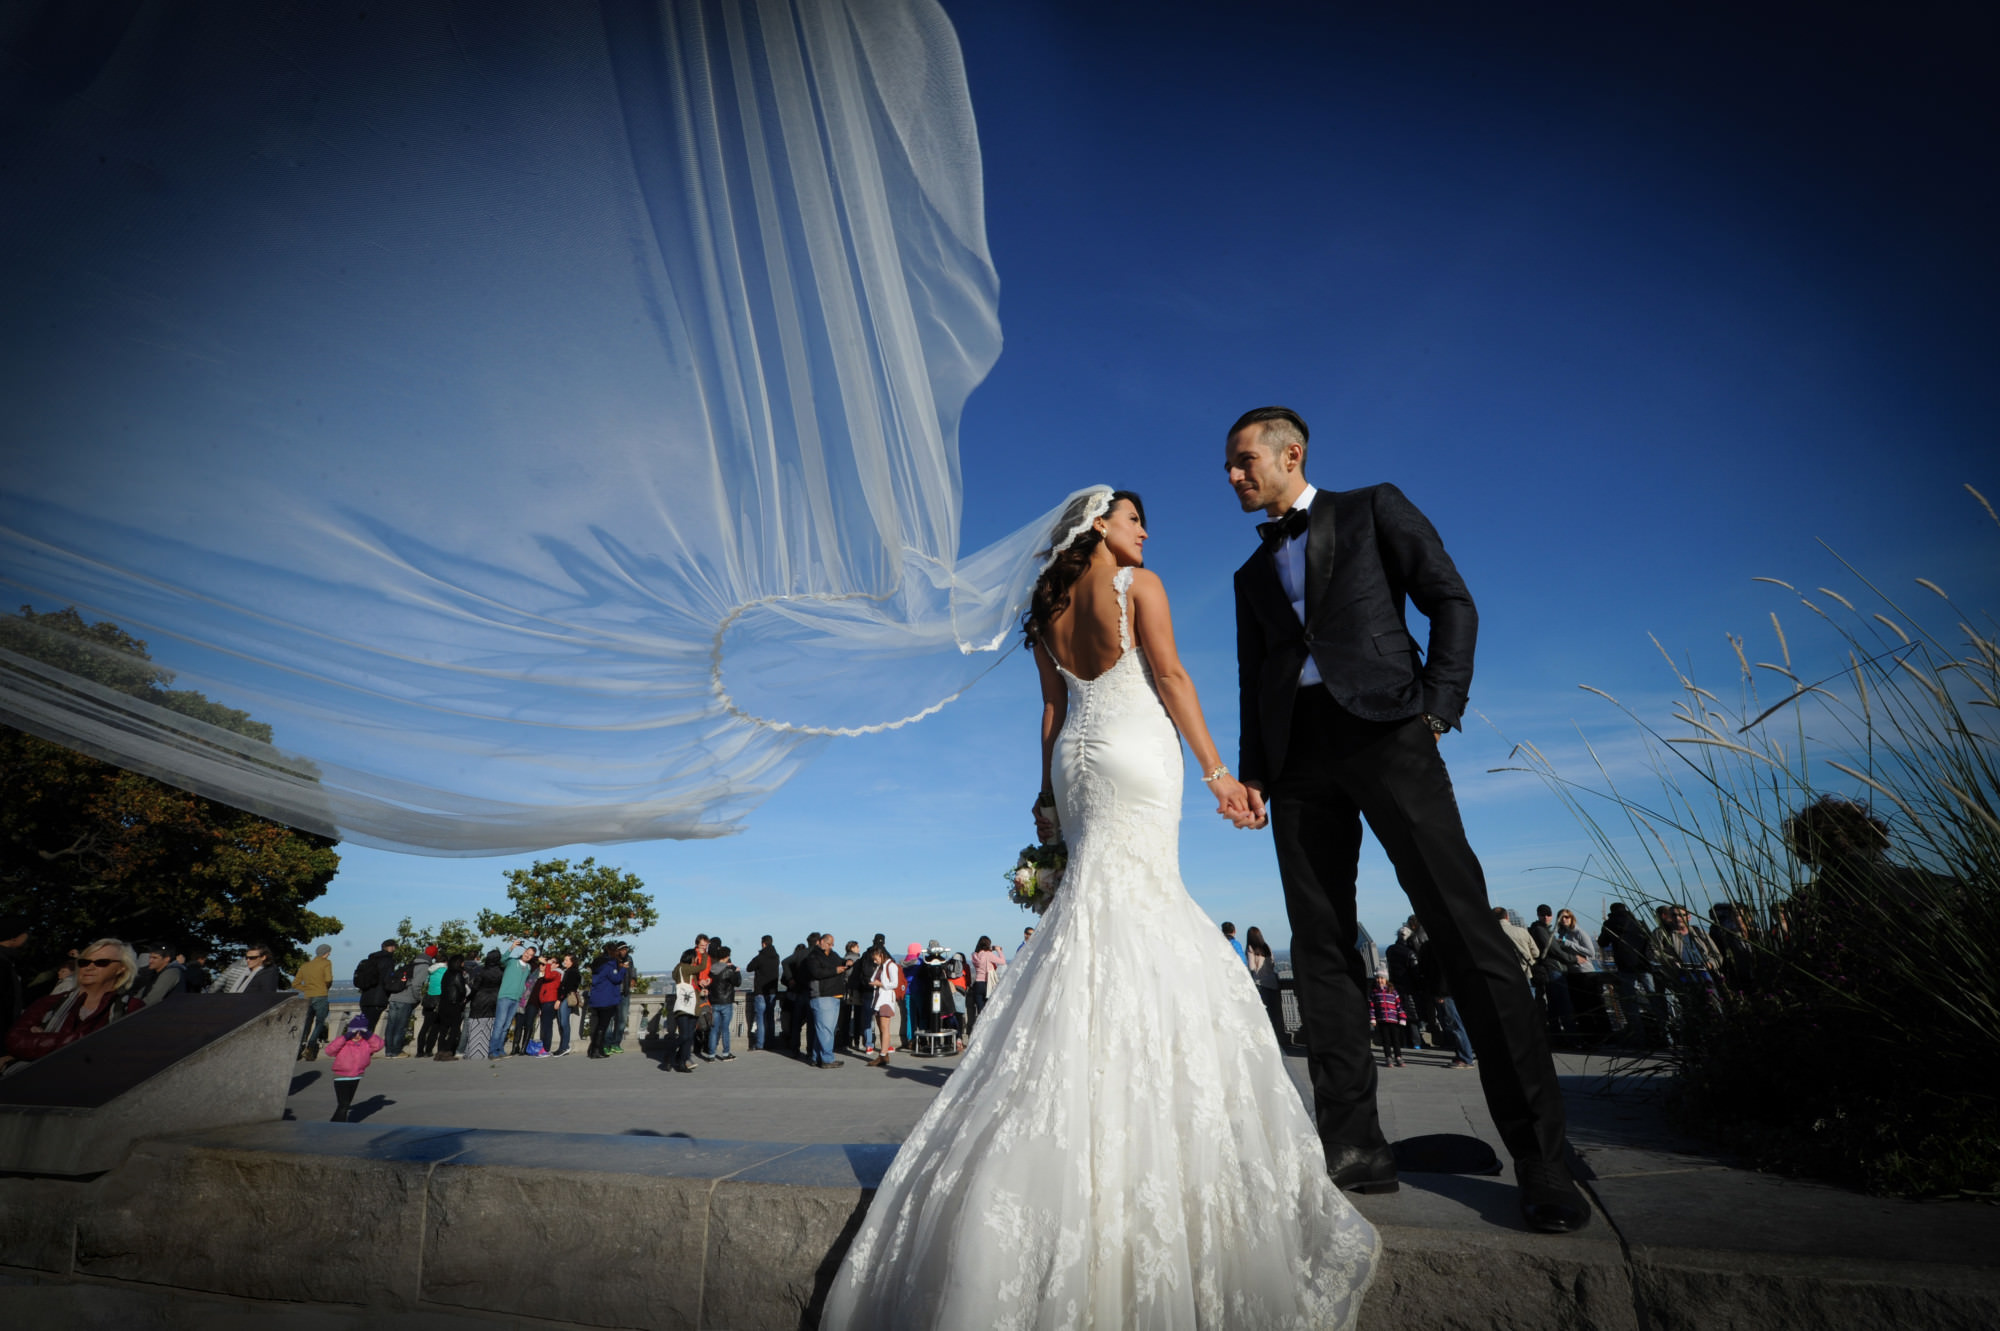 best results from your wedding photographer vera varley new york wedding photography lavimage lavcinema blog wedding advice wedding tips 